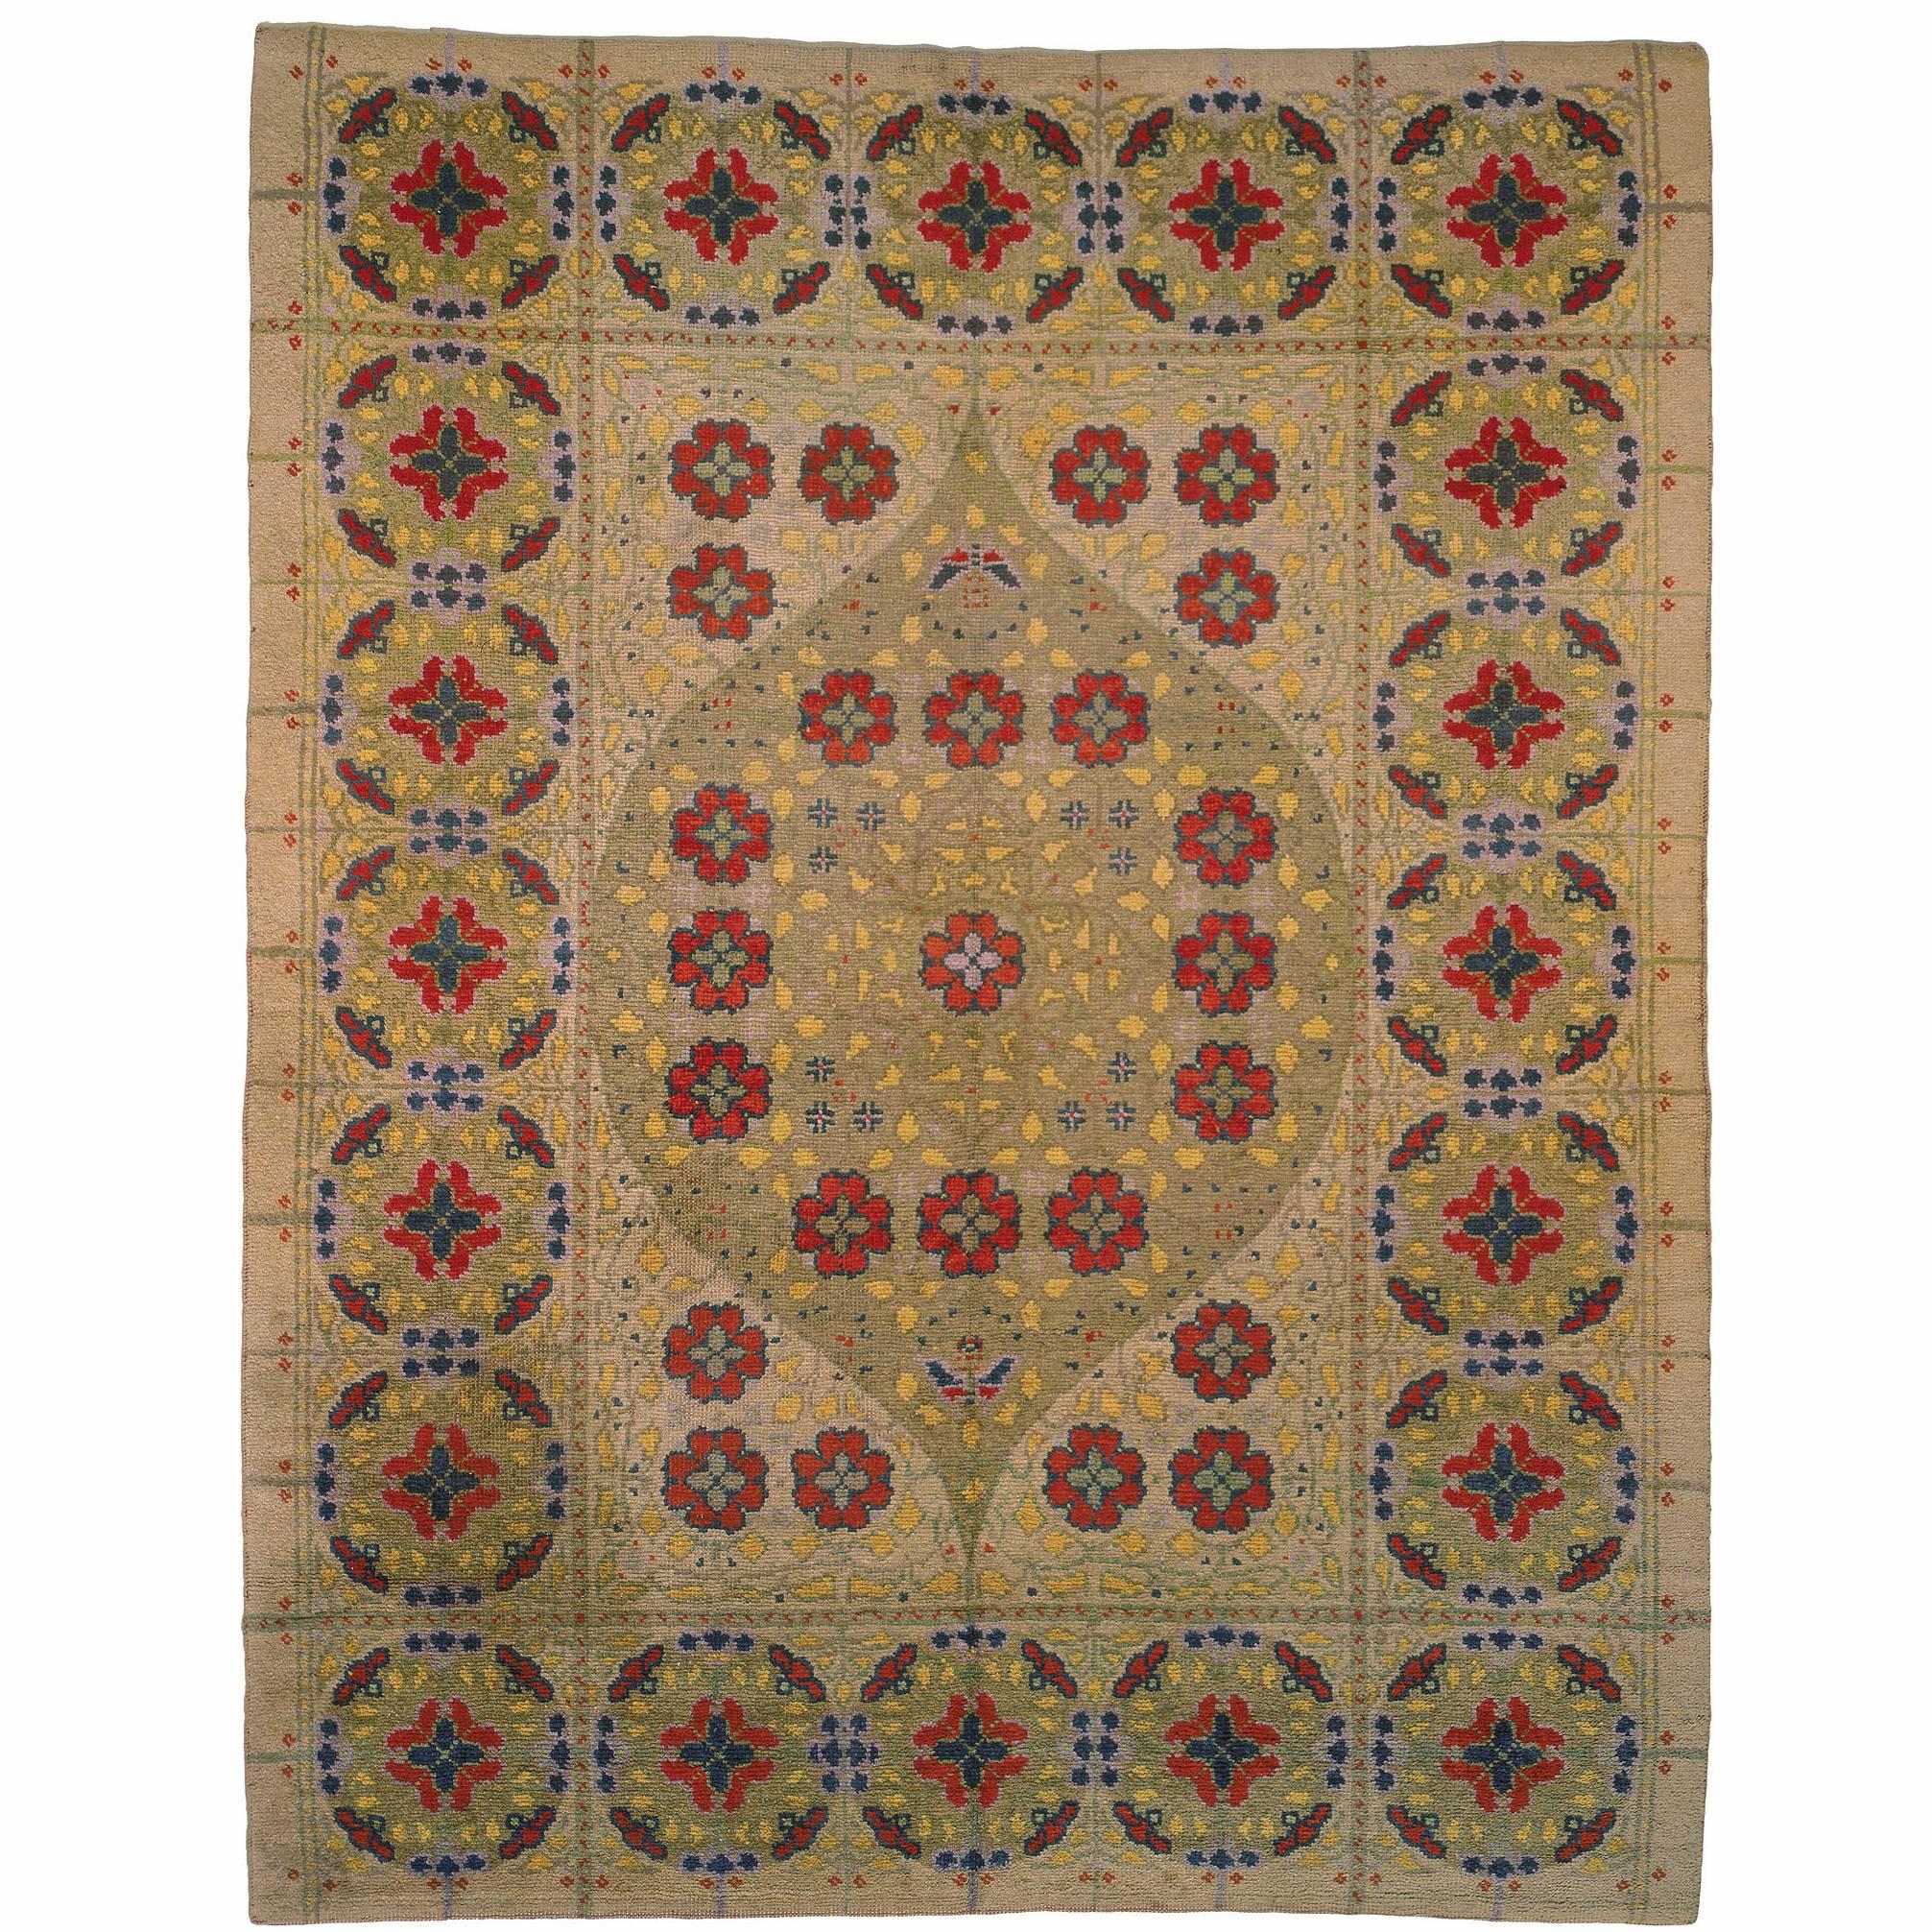 Early 20th Century Swedish Pile Carpet